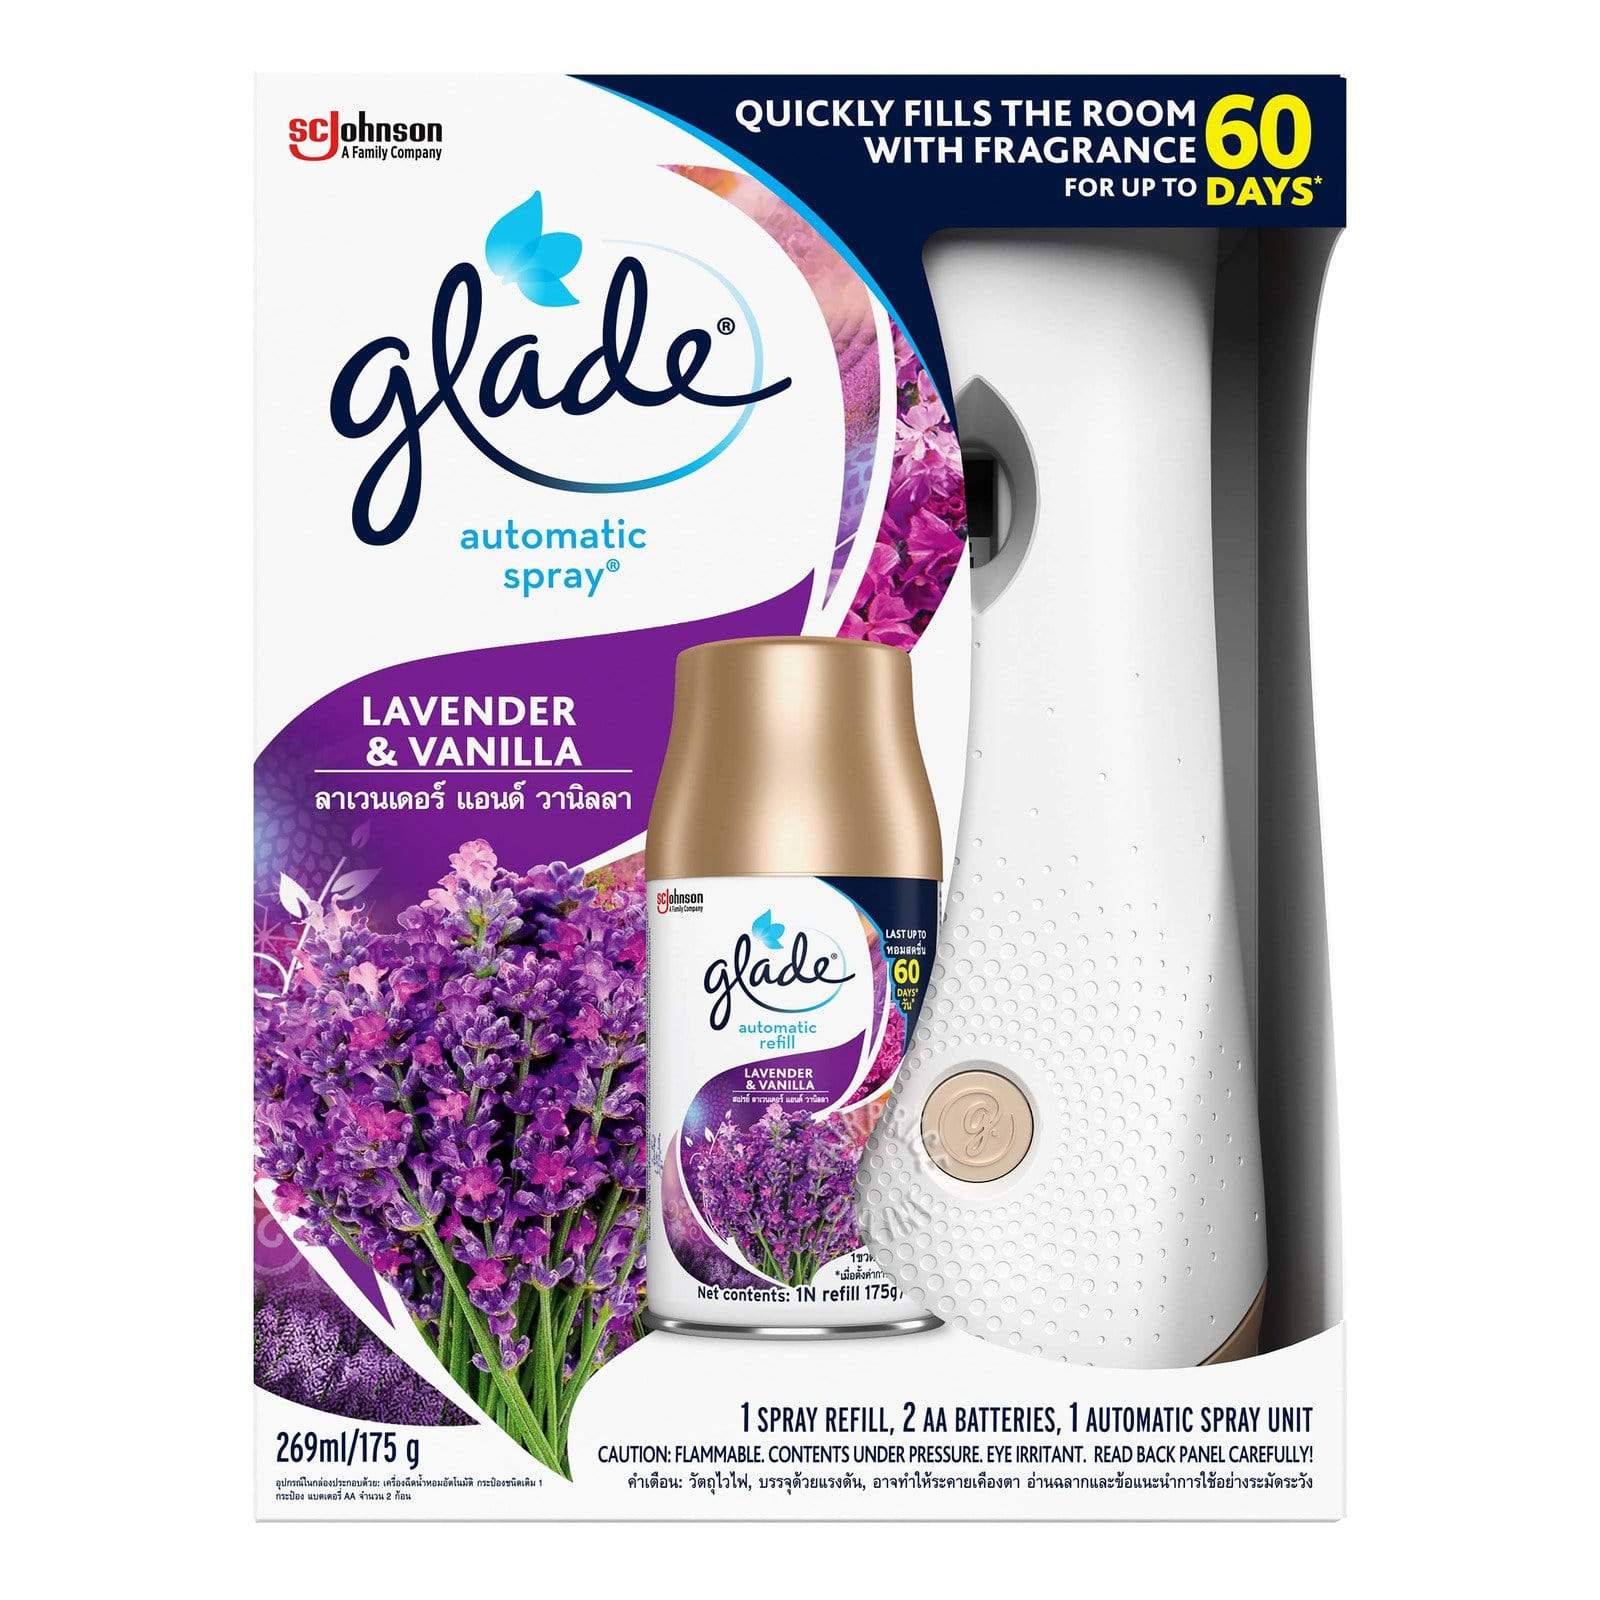 Glade Automatic Spray 3 in 1 Lavender & Vanilla Air Freshener 175g